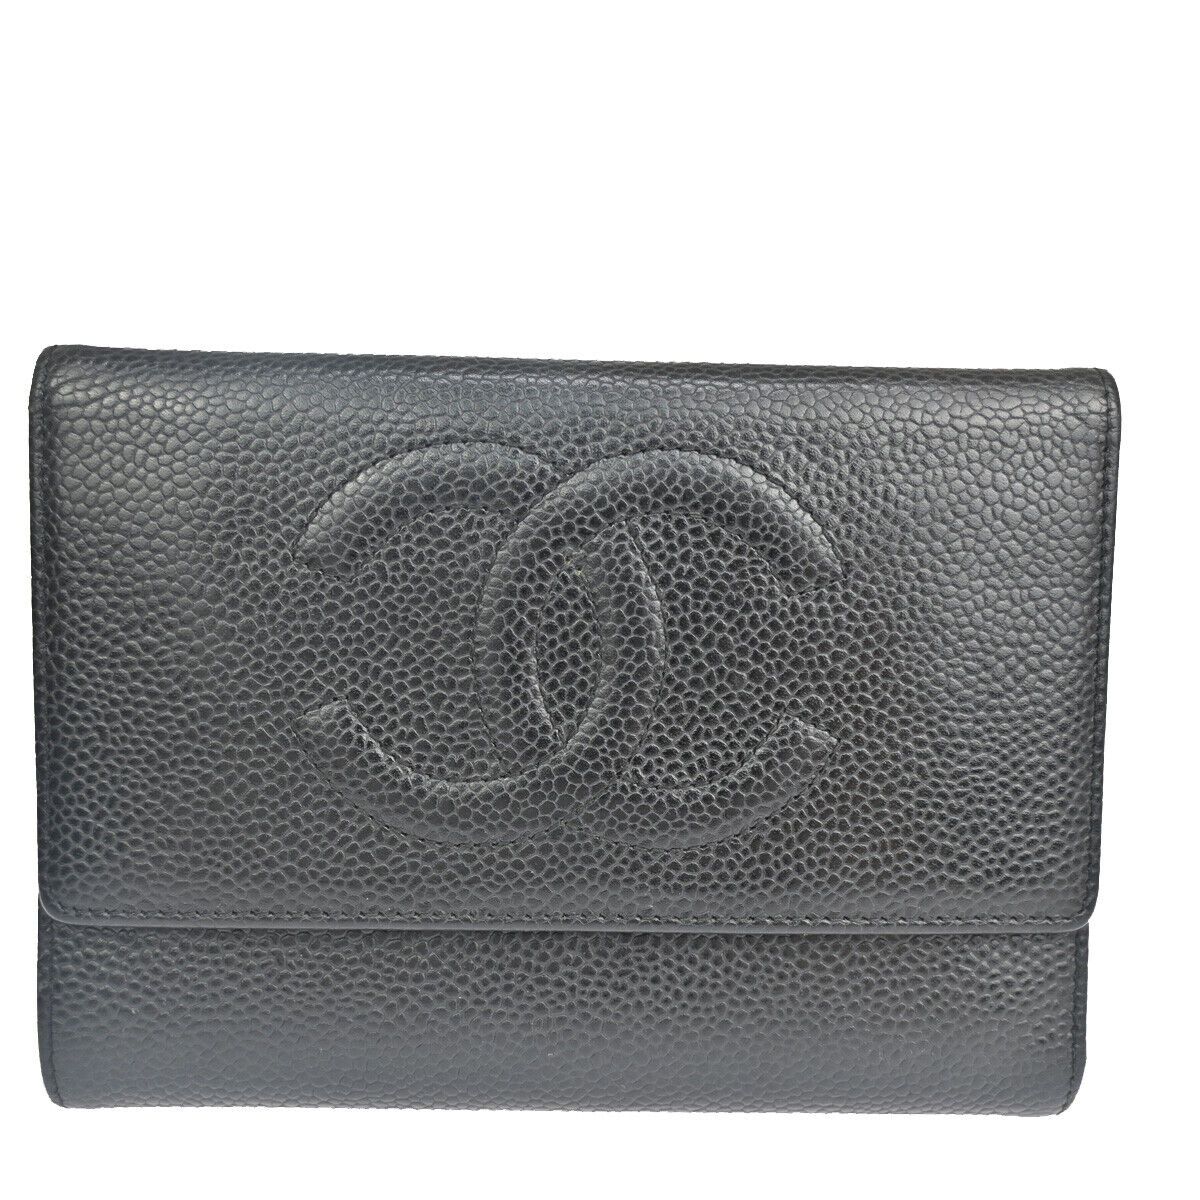 Chanel Chanel Logo CC wallet